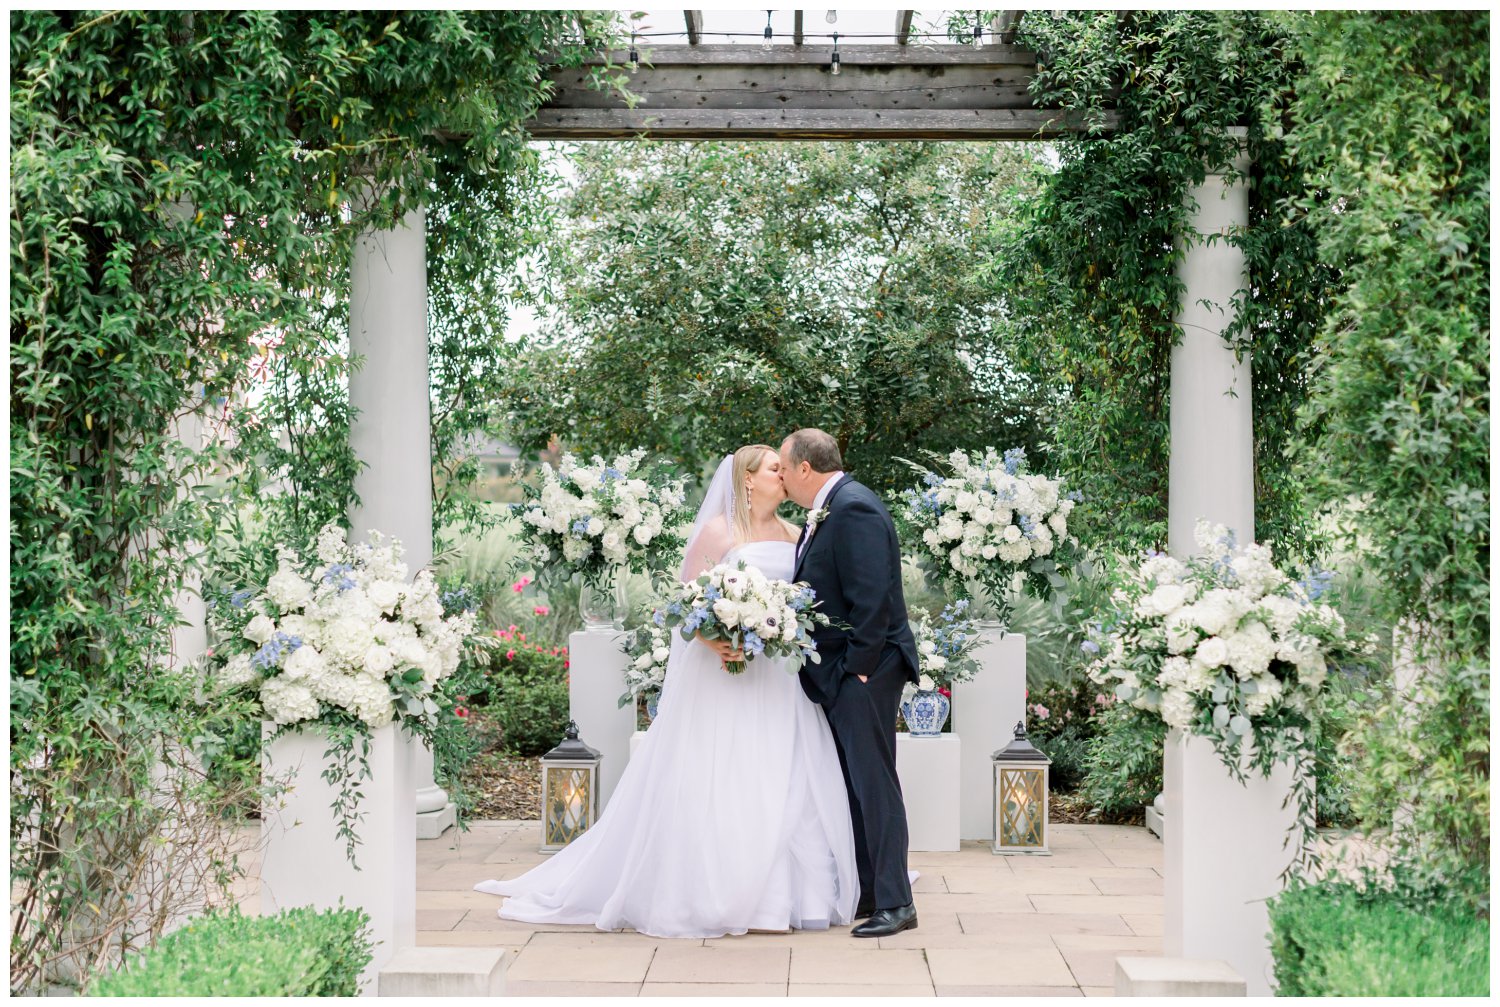 Ballantyne Hotel wedding garden inspired in Charlotte North Carolina by photographer Samantha Laffoon